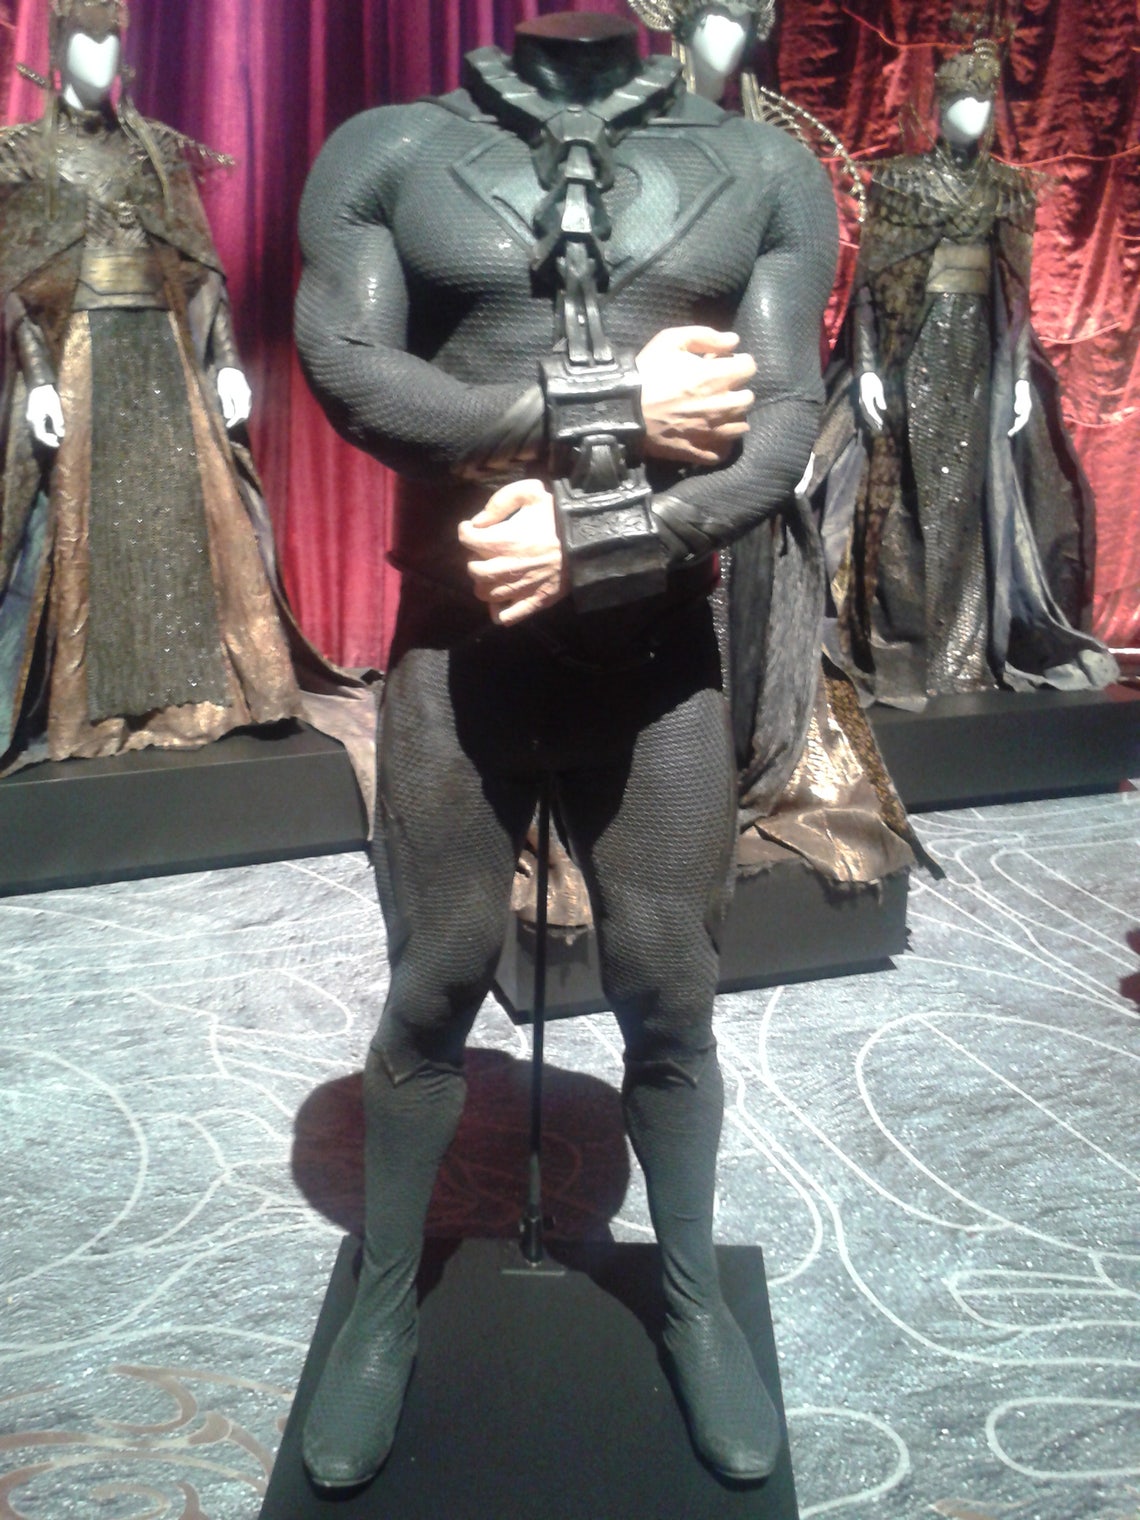 man of steel zod costume